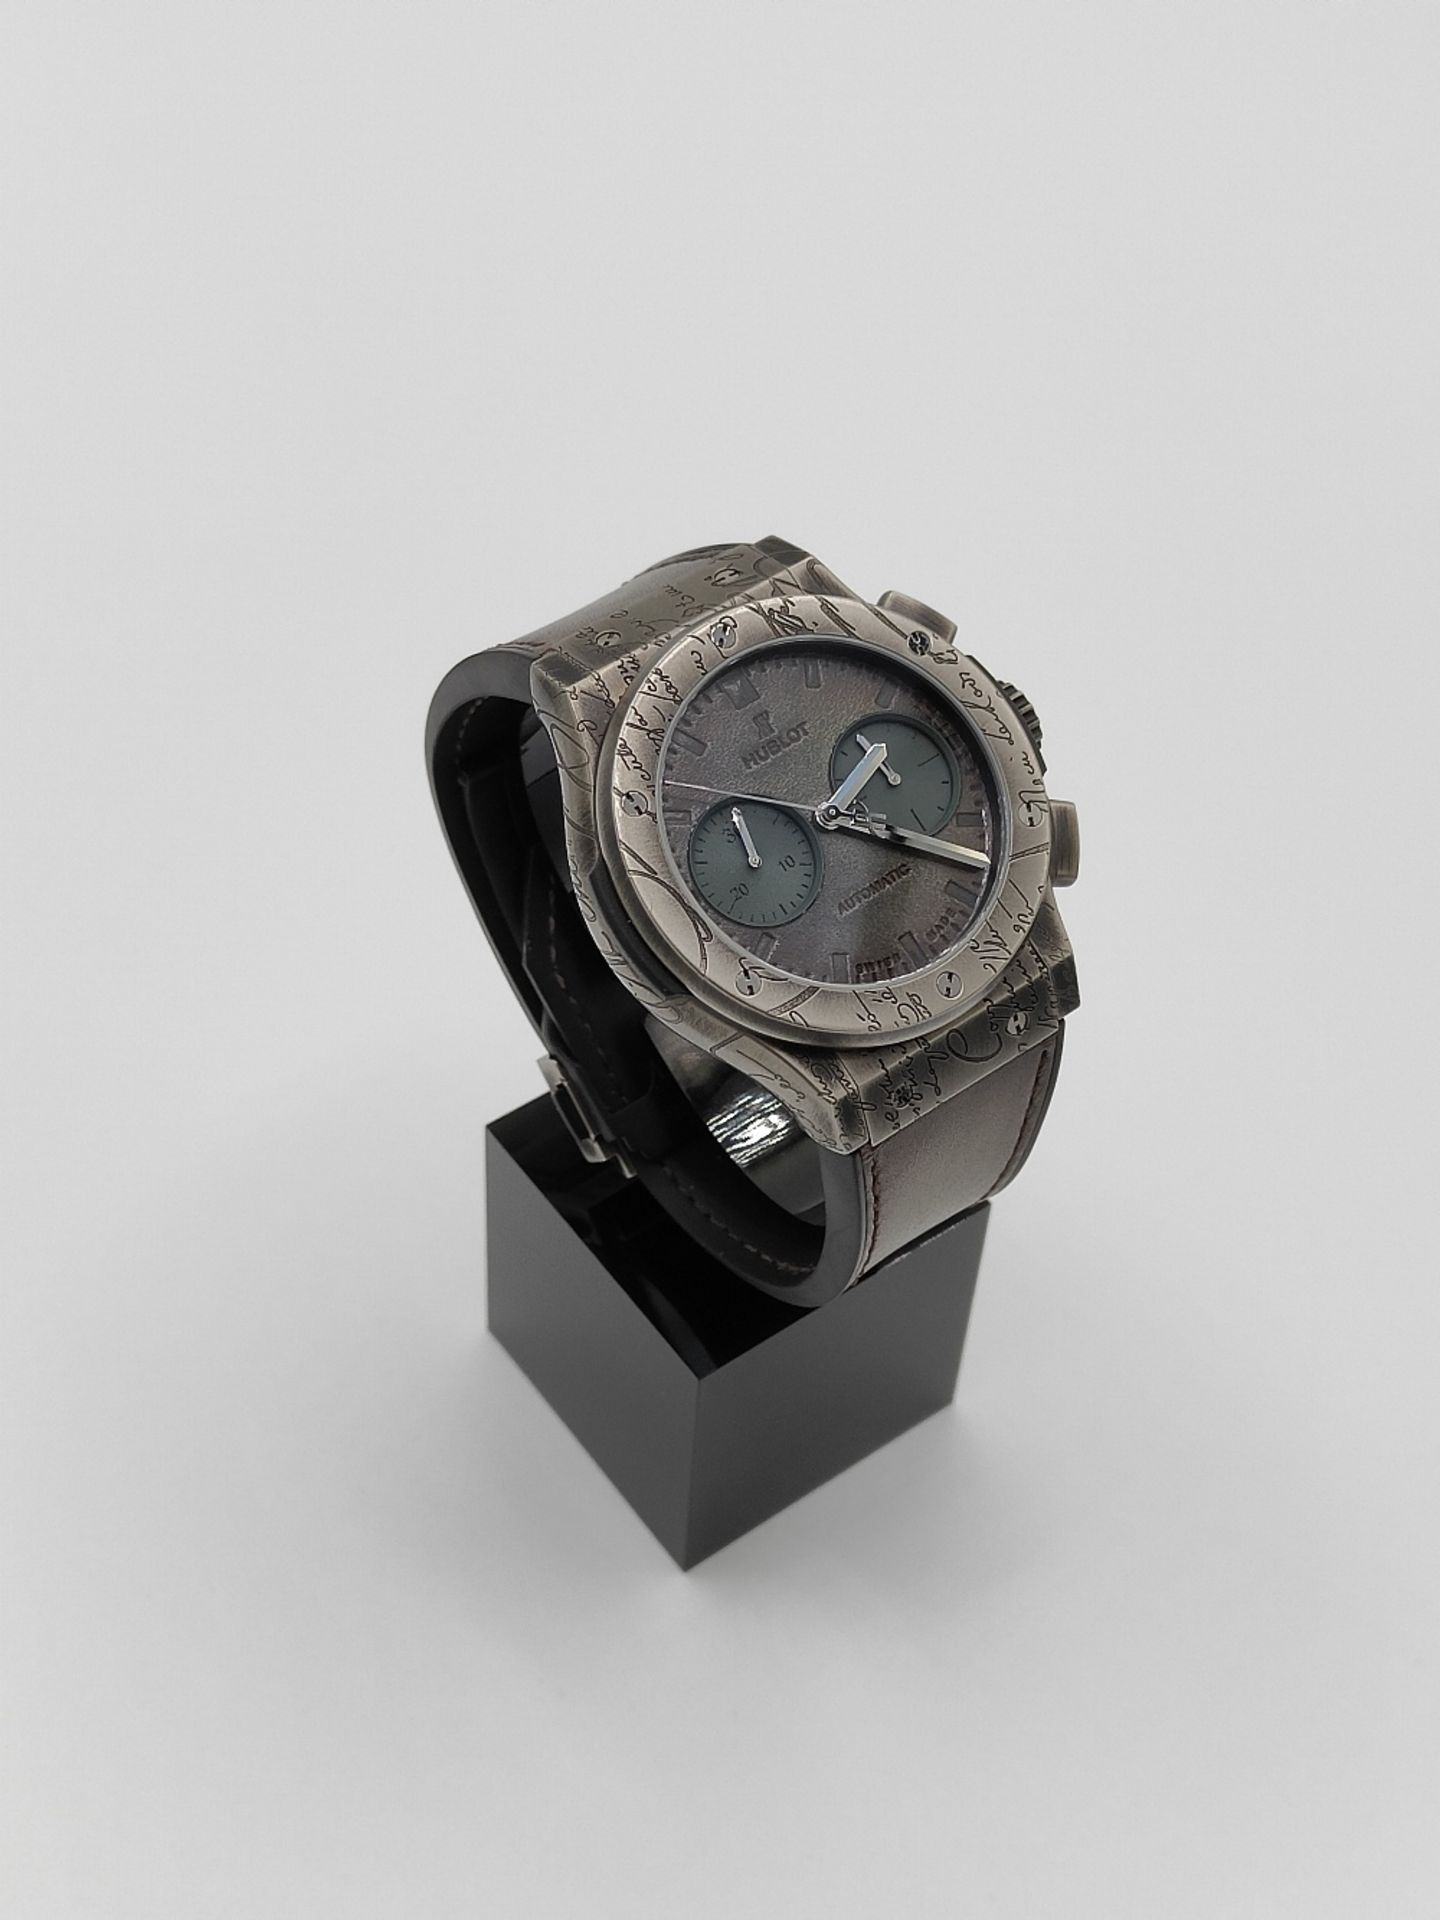 Hublot Berluti Classic Fusion Limited Edition Watch - Image 3 of 9